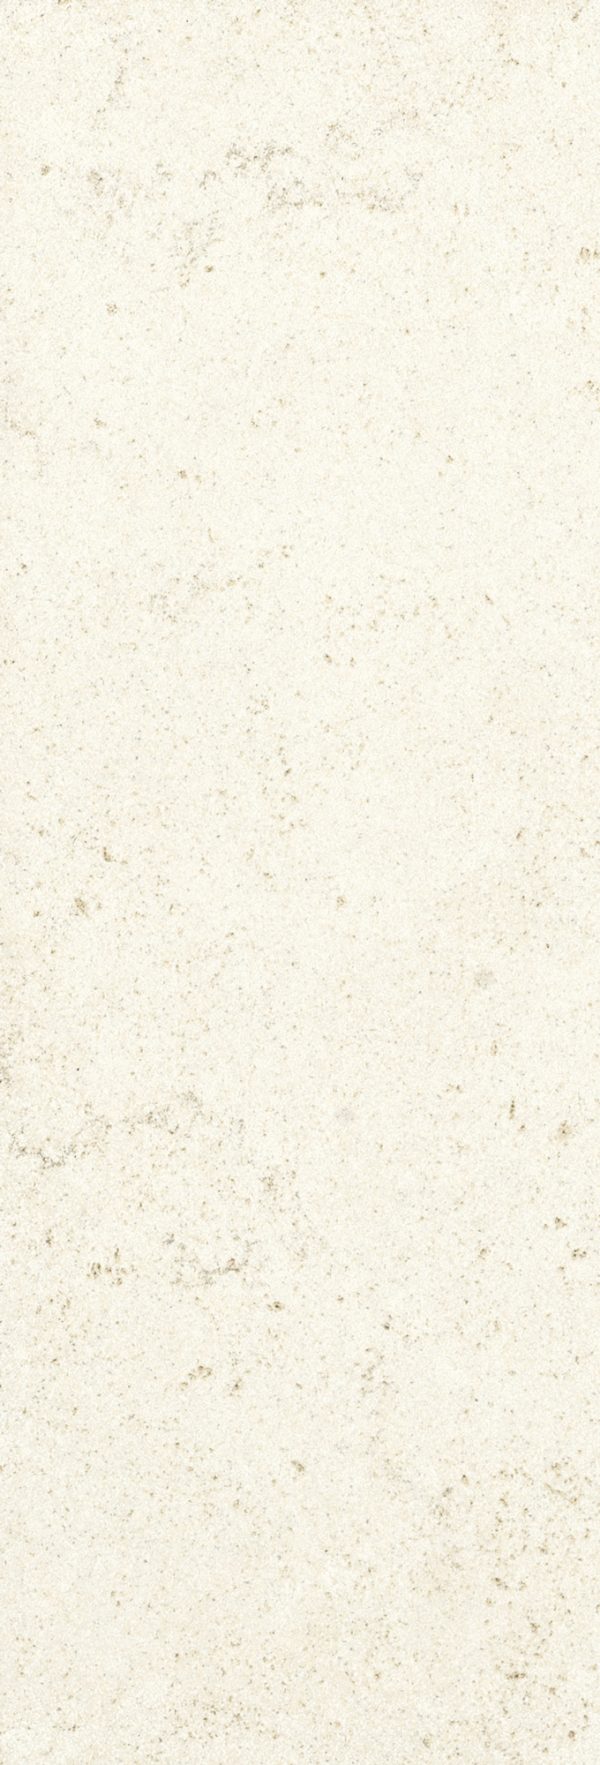 BUXY  kerlite3plus Corail Blanc  100x300cm   Rett. hr. 3,5mm